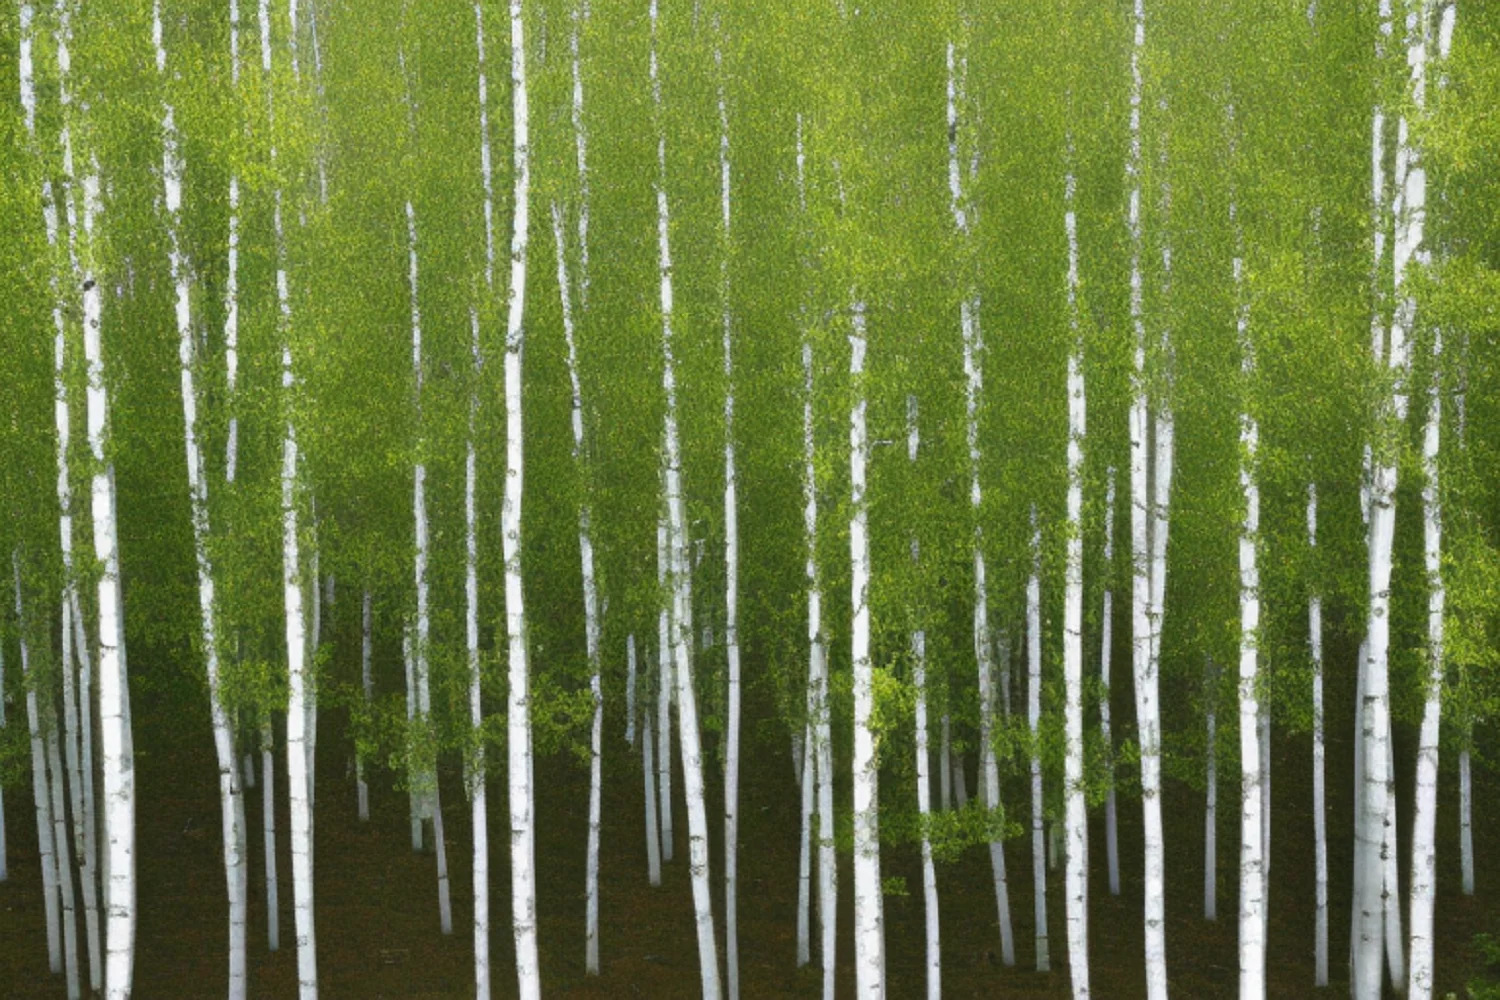 "Poplar Trees: The Ultimate Beauty in Your Backyard"